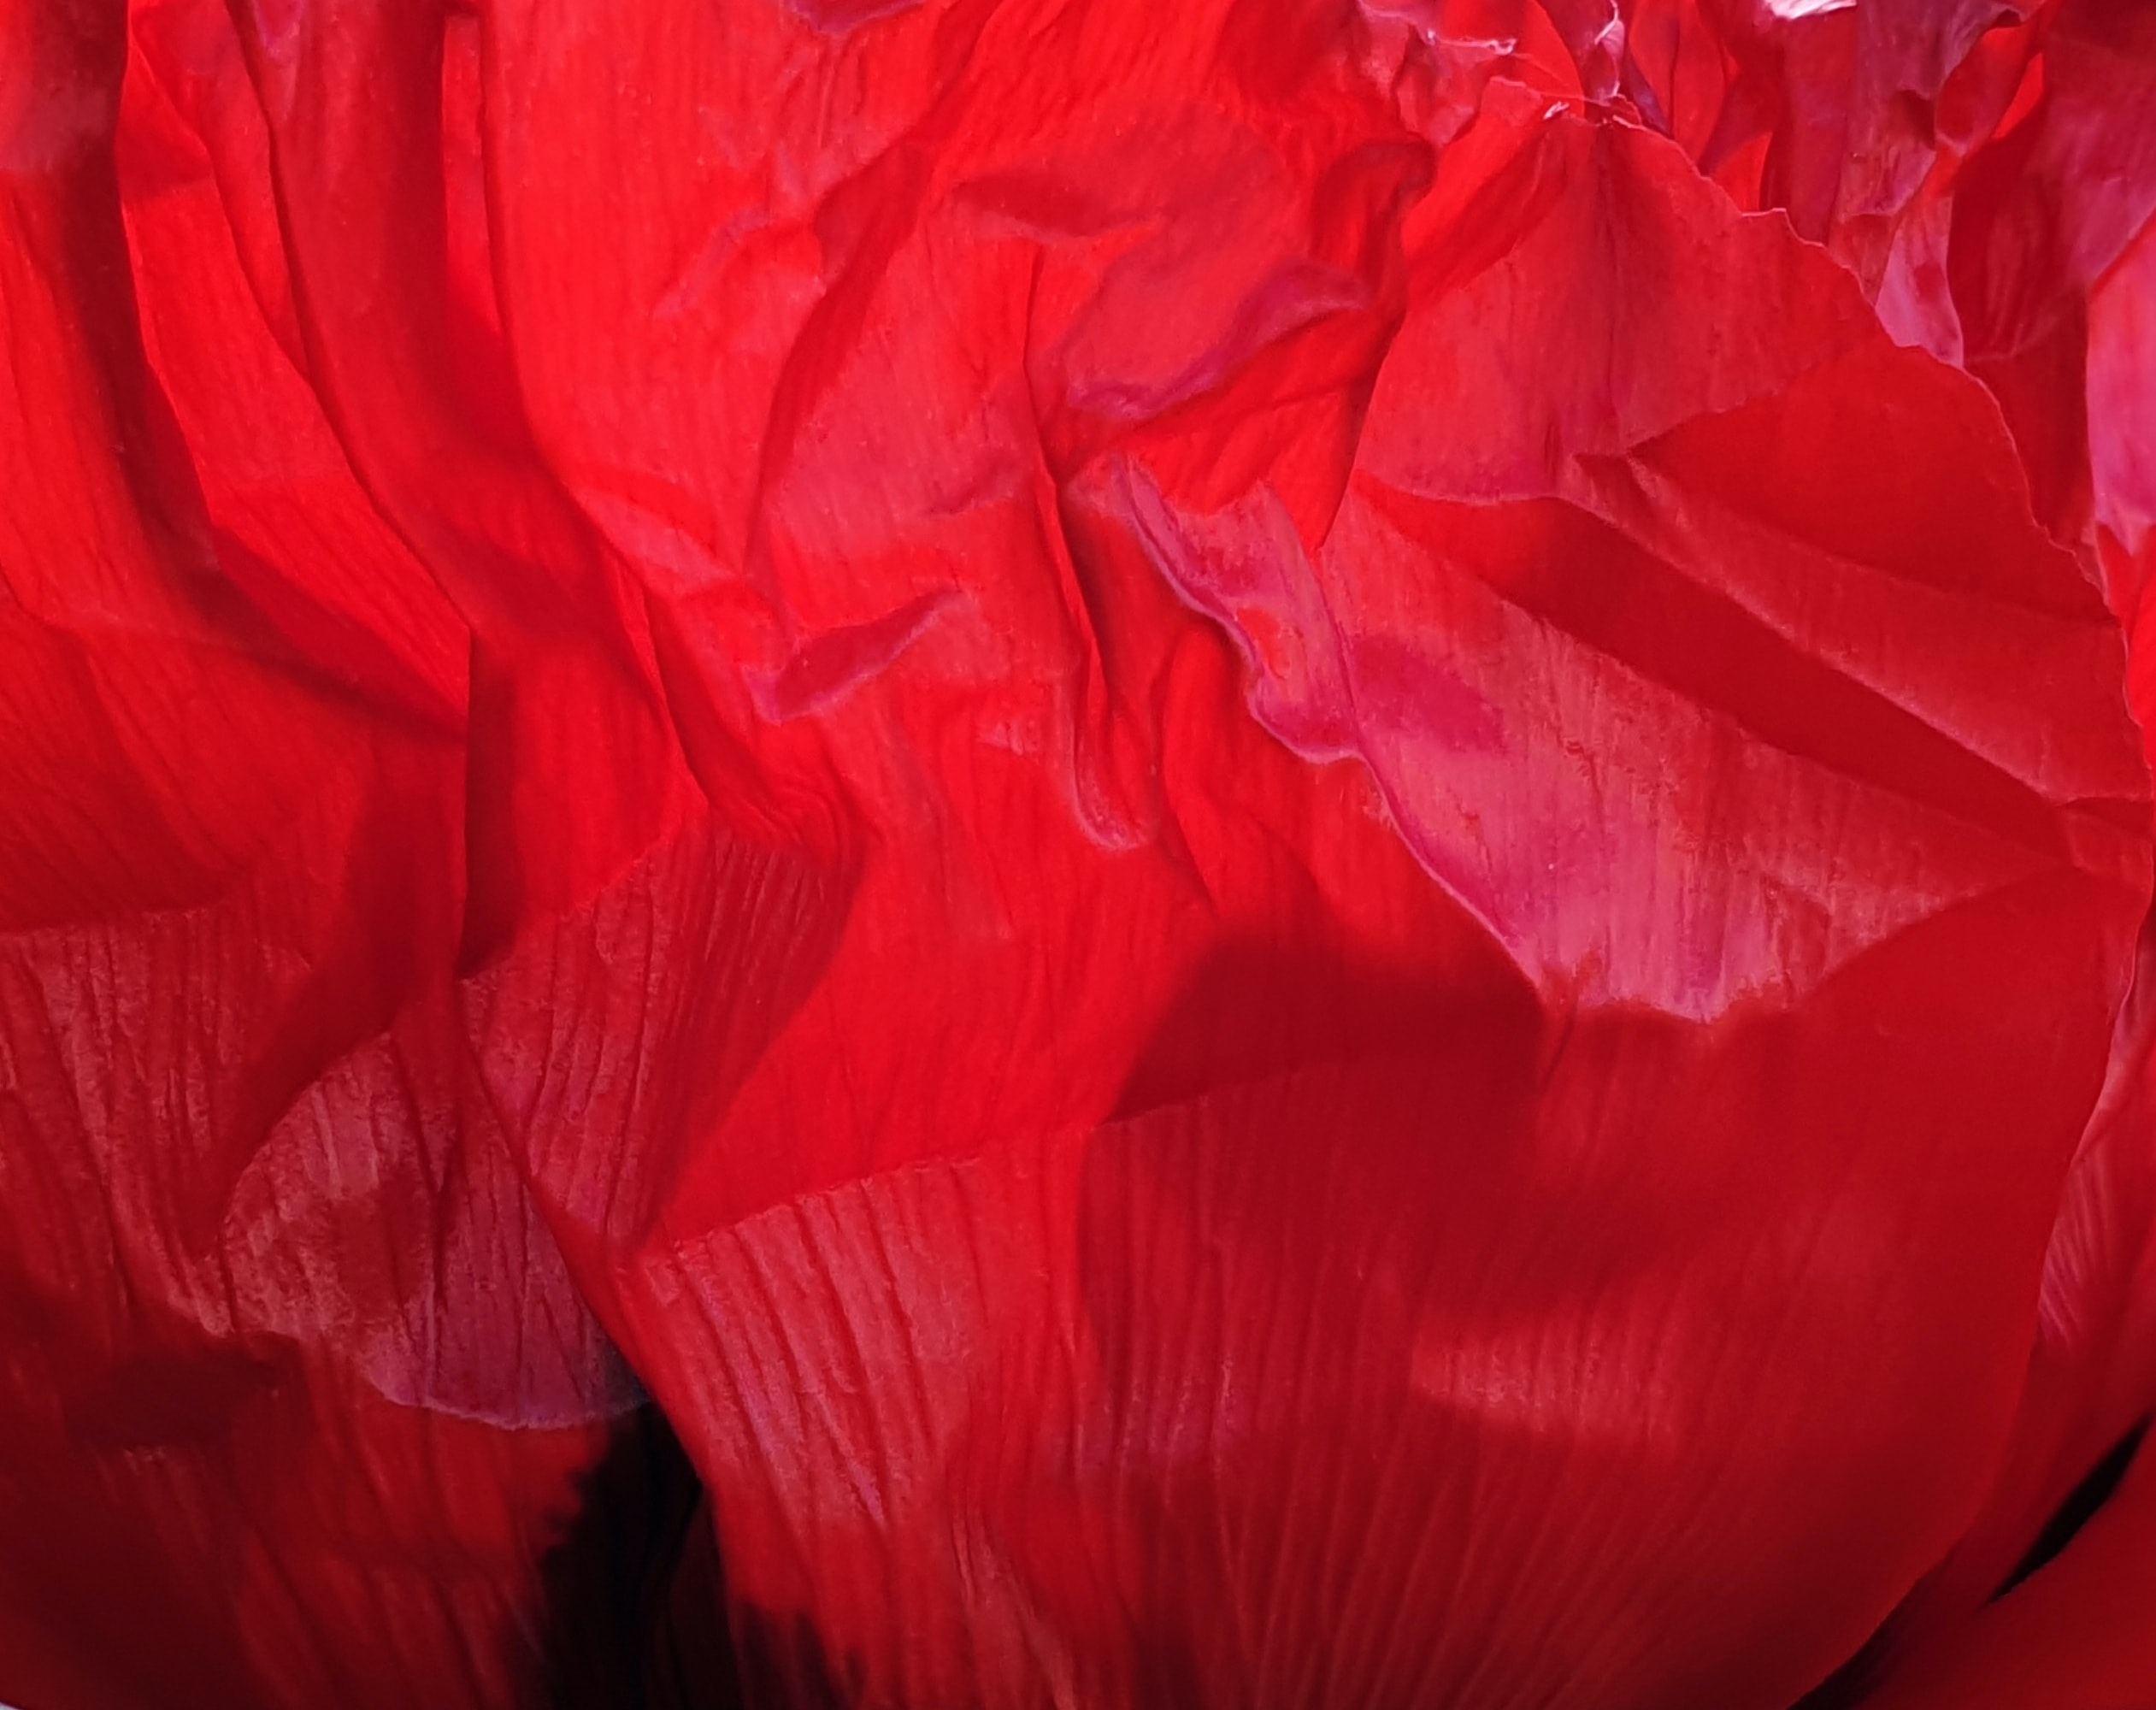 textures, red, flower, petals, texture, crumpled lock screen backgrounds